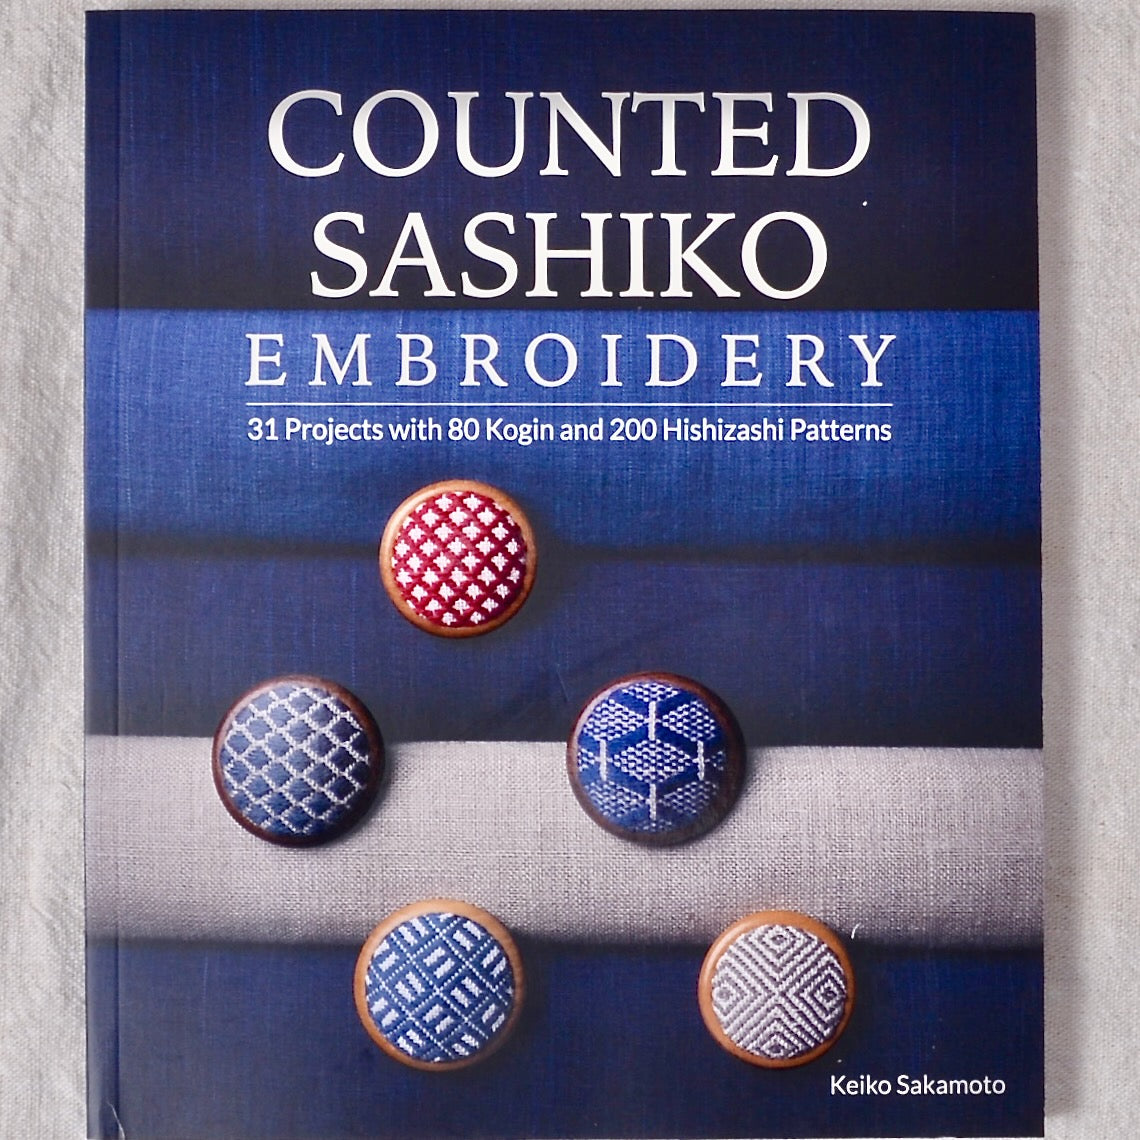 Counted Sashiko Embroidery Book by Keiko Sakamoto